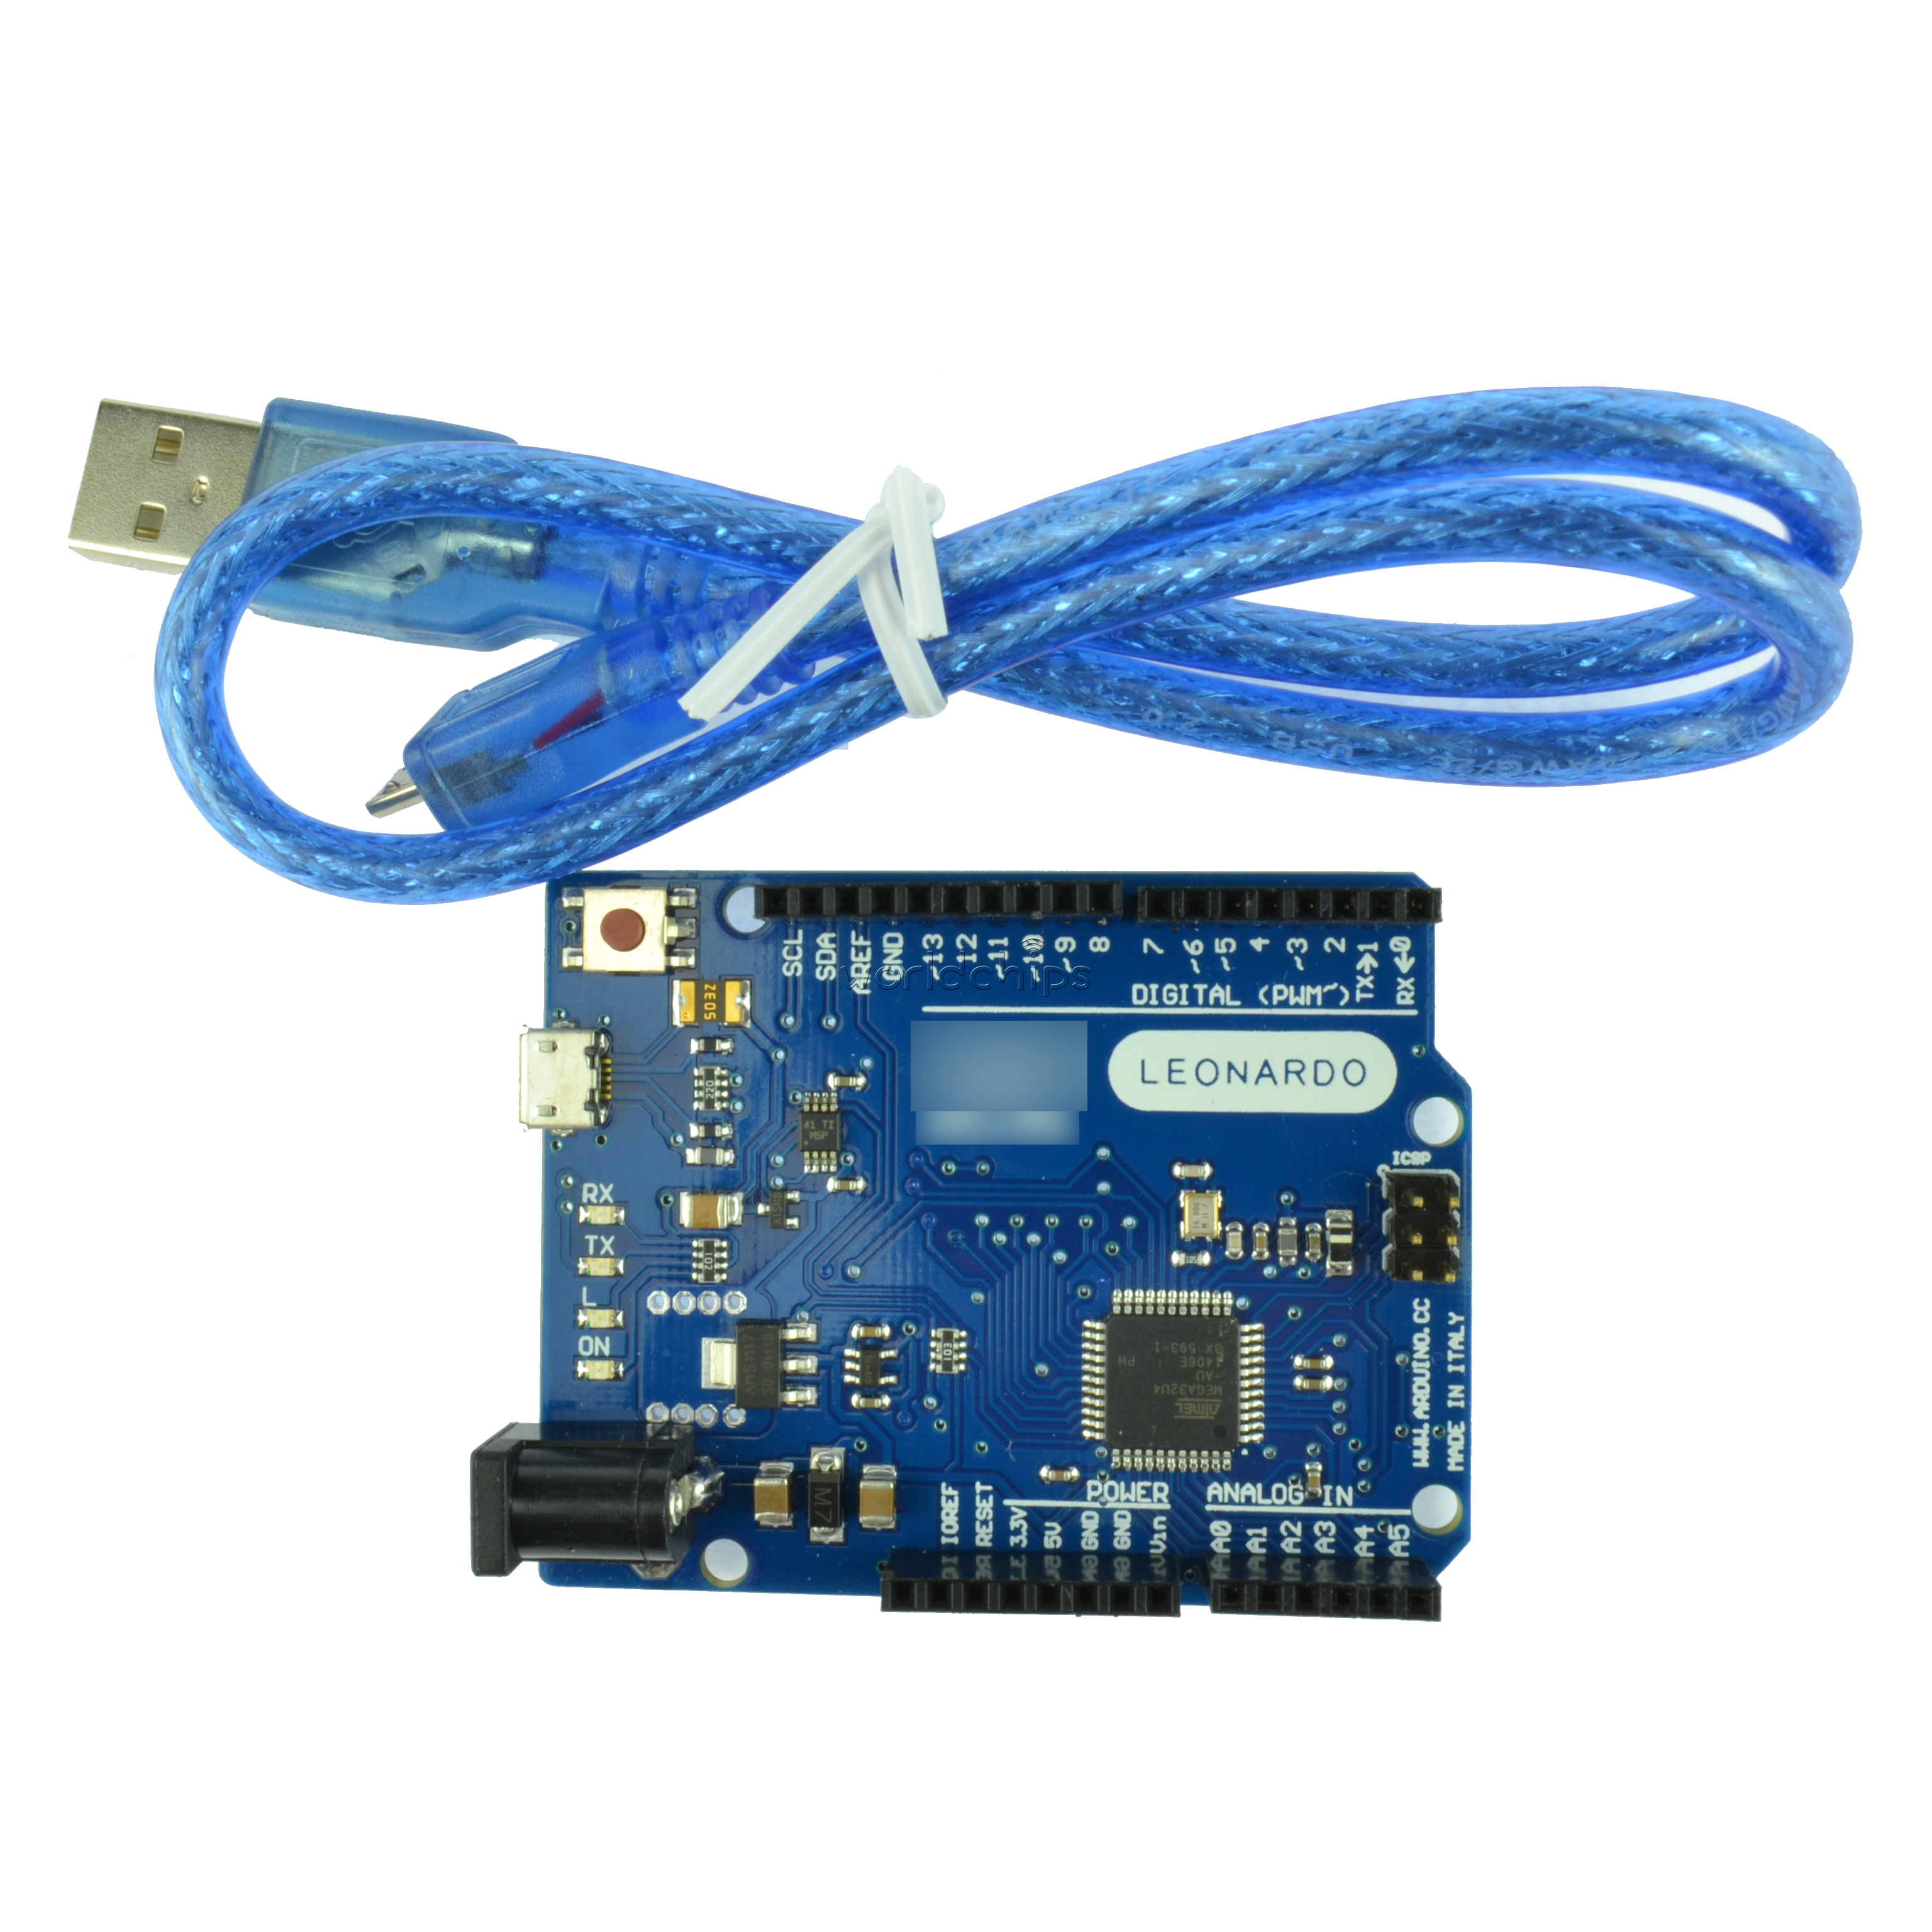 Leonardo R3 ATmega32U4 Micro USB Compatible to Arduino without Cable